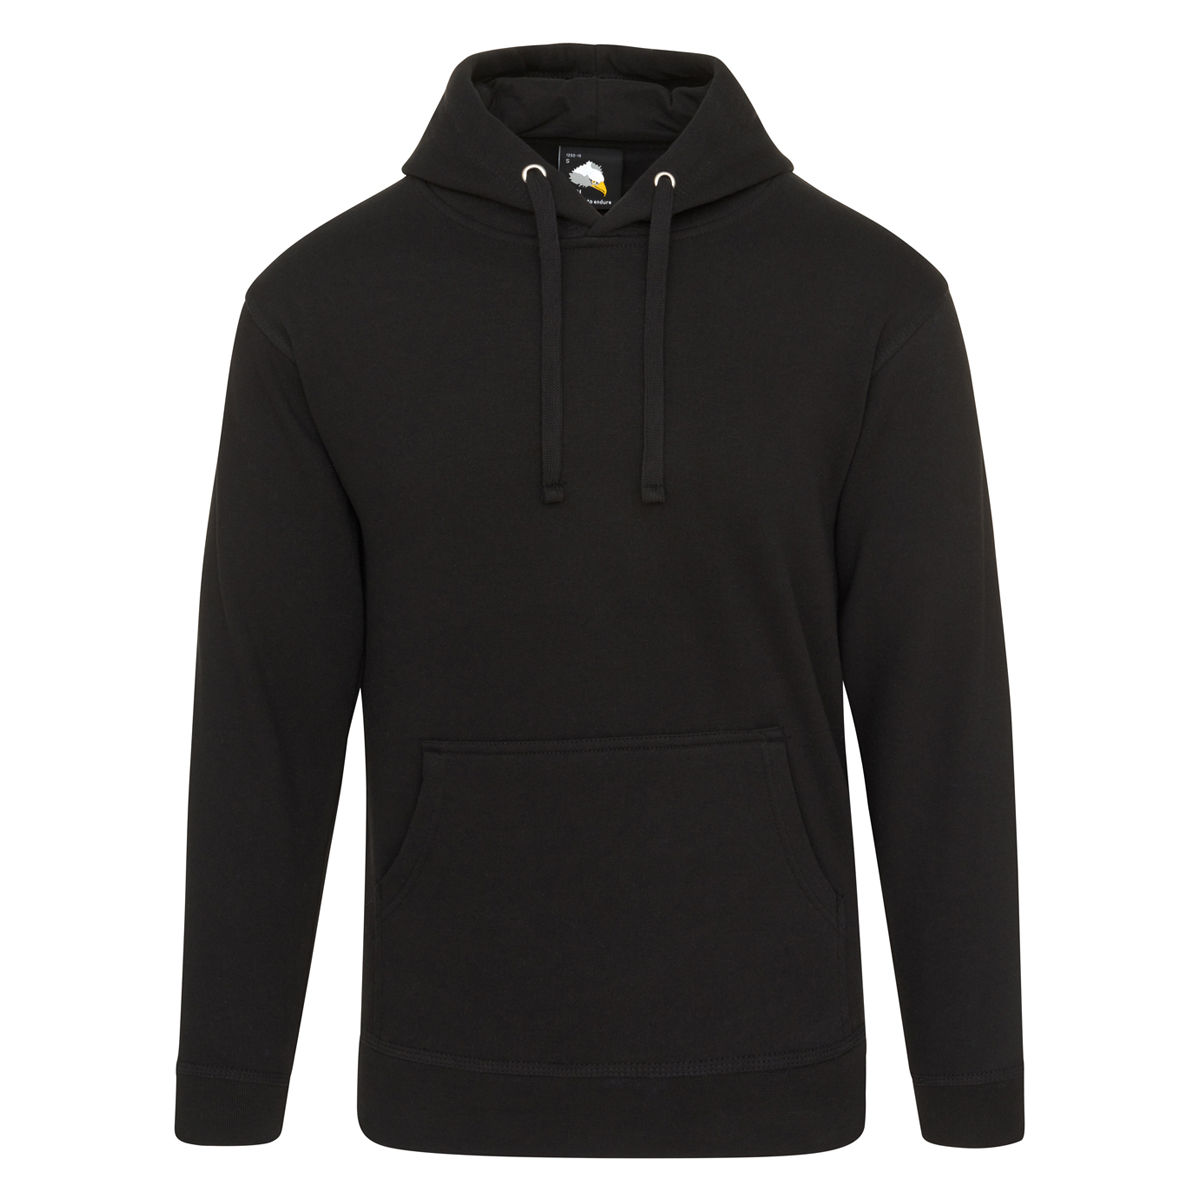 Owl hooded sweatshirt - 5xl - black